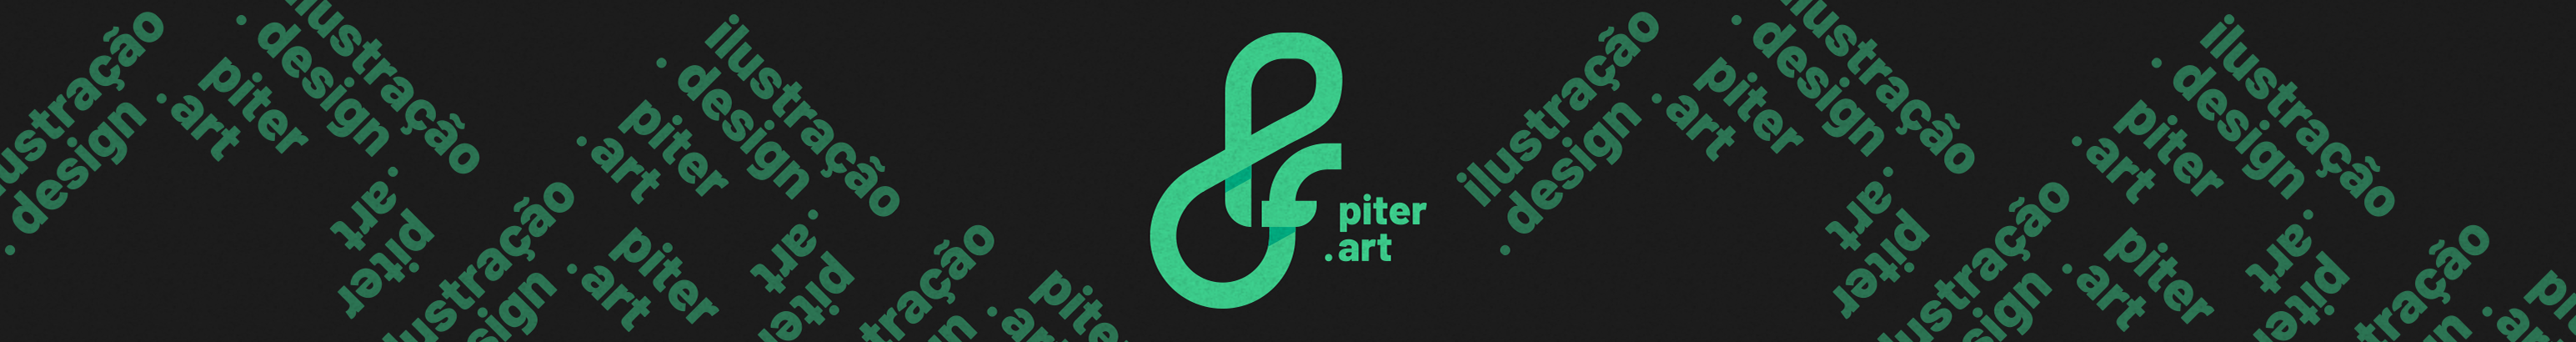 Piter Fontana's profile banner